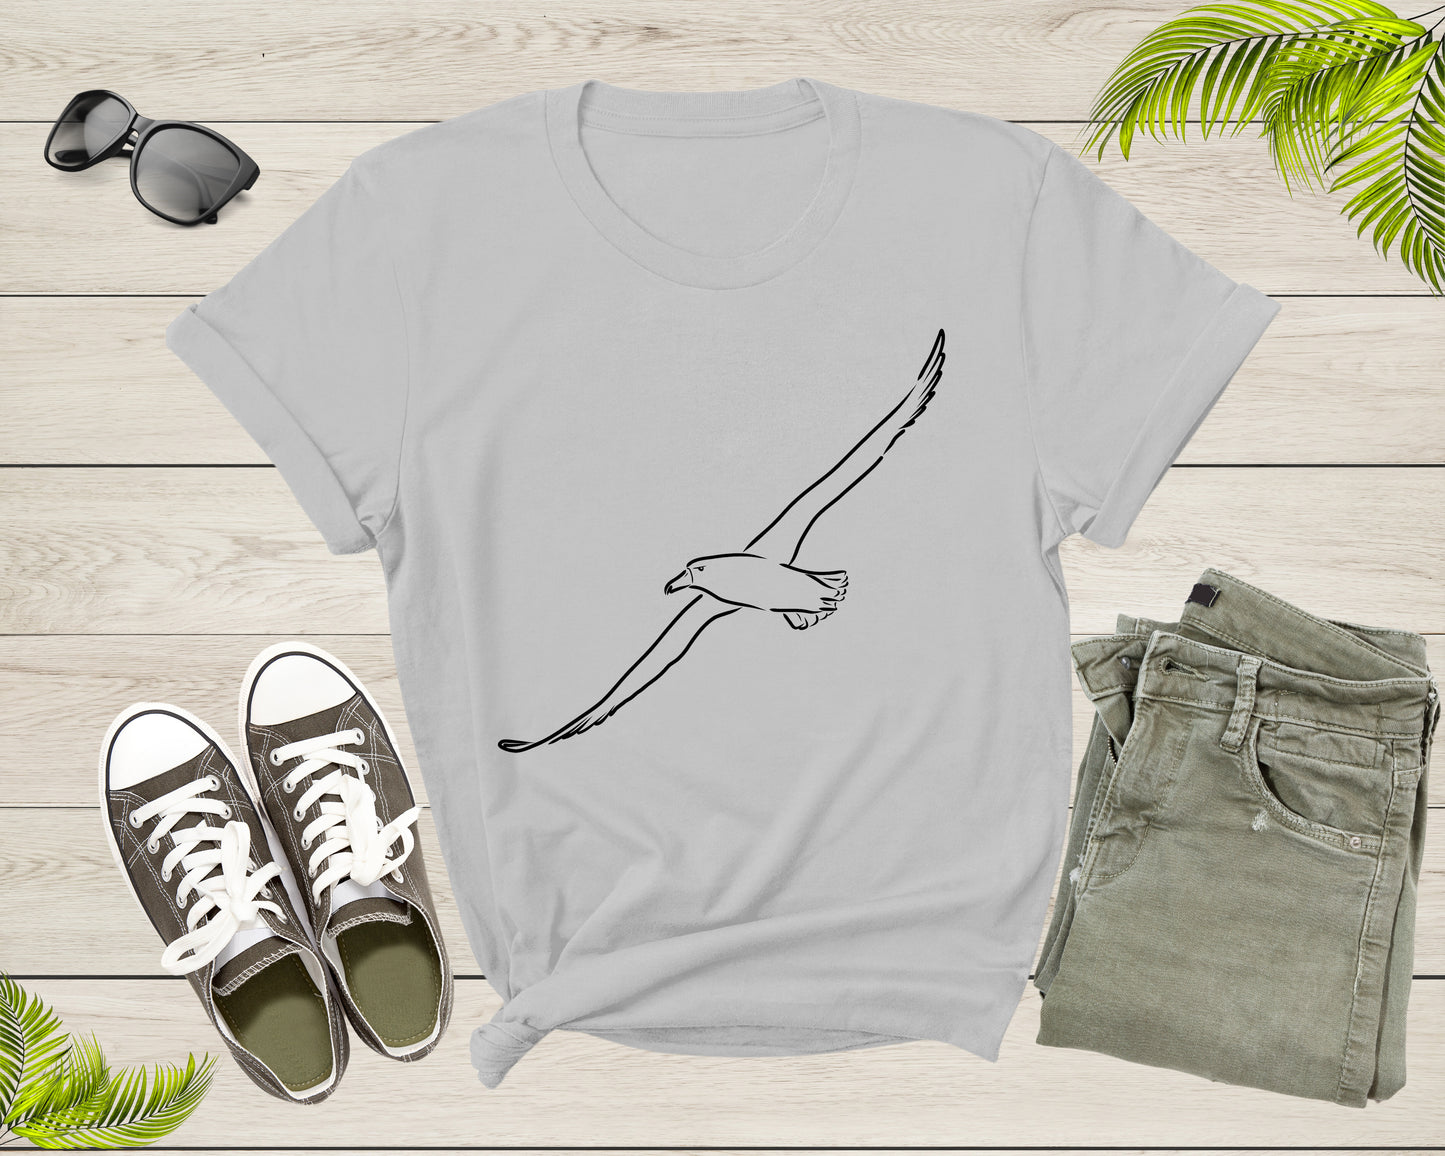 Flying Soaring Wandering Albatross Bird Lover Gift Shirt For Men Women Kids Boys Girls Cool Albatross Graphic Print Birdwatcher Tshirt